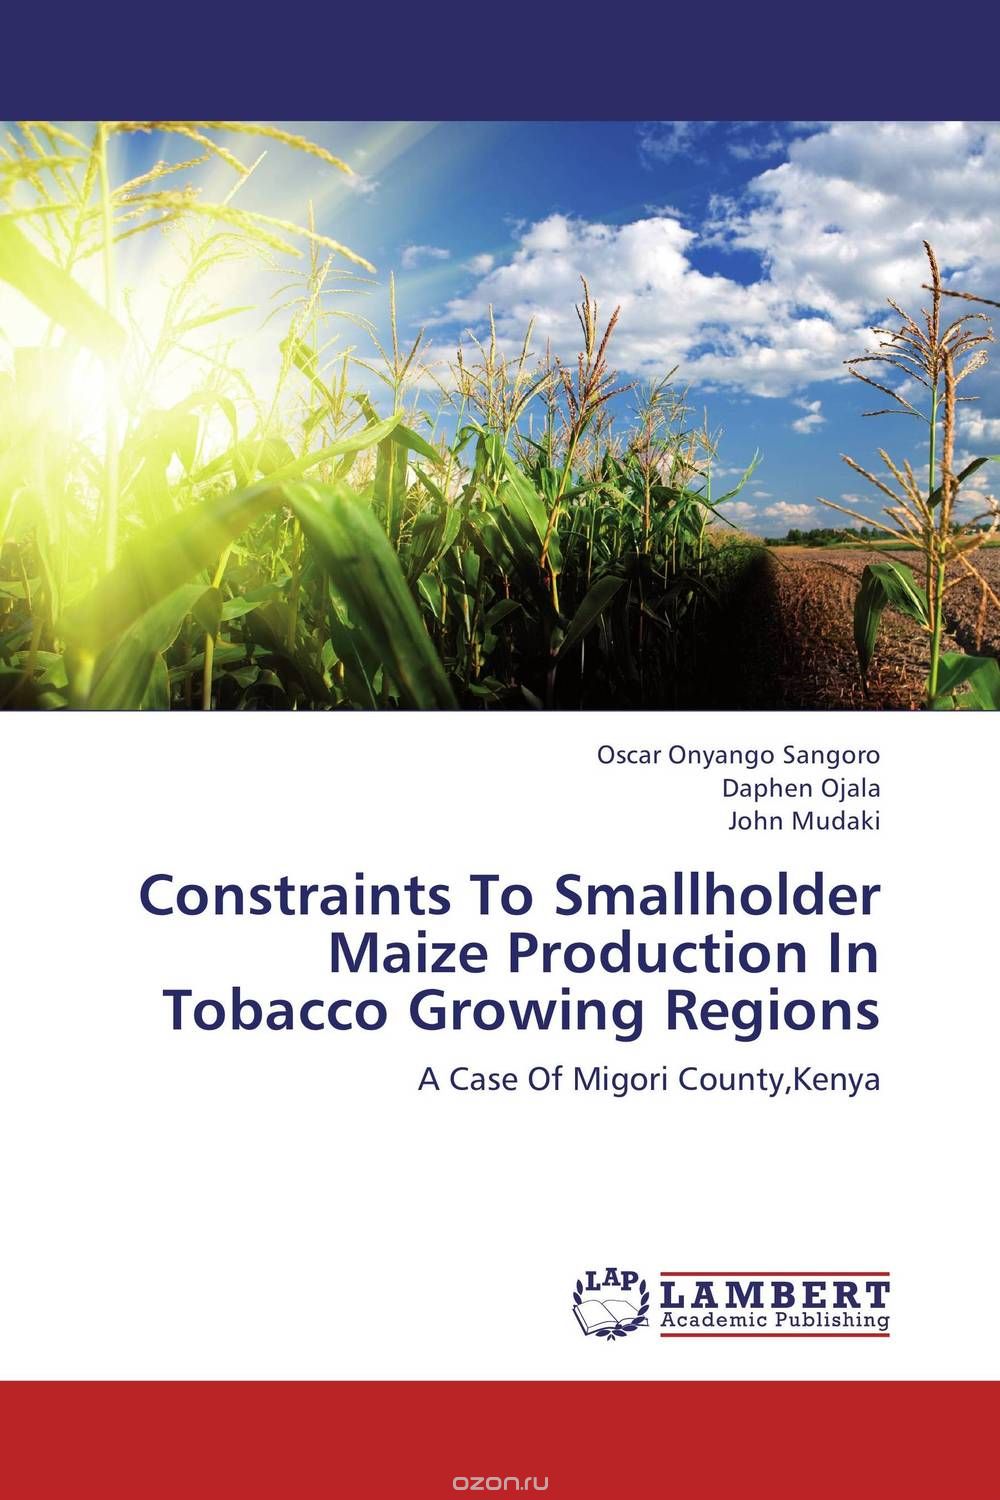 Скачать книгу "Constraints To Smallholder Maize Production In Tobacco Growing Regions"